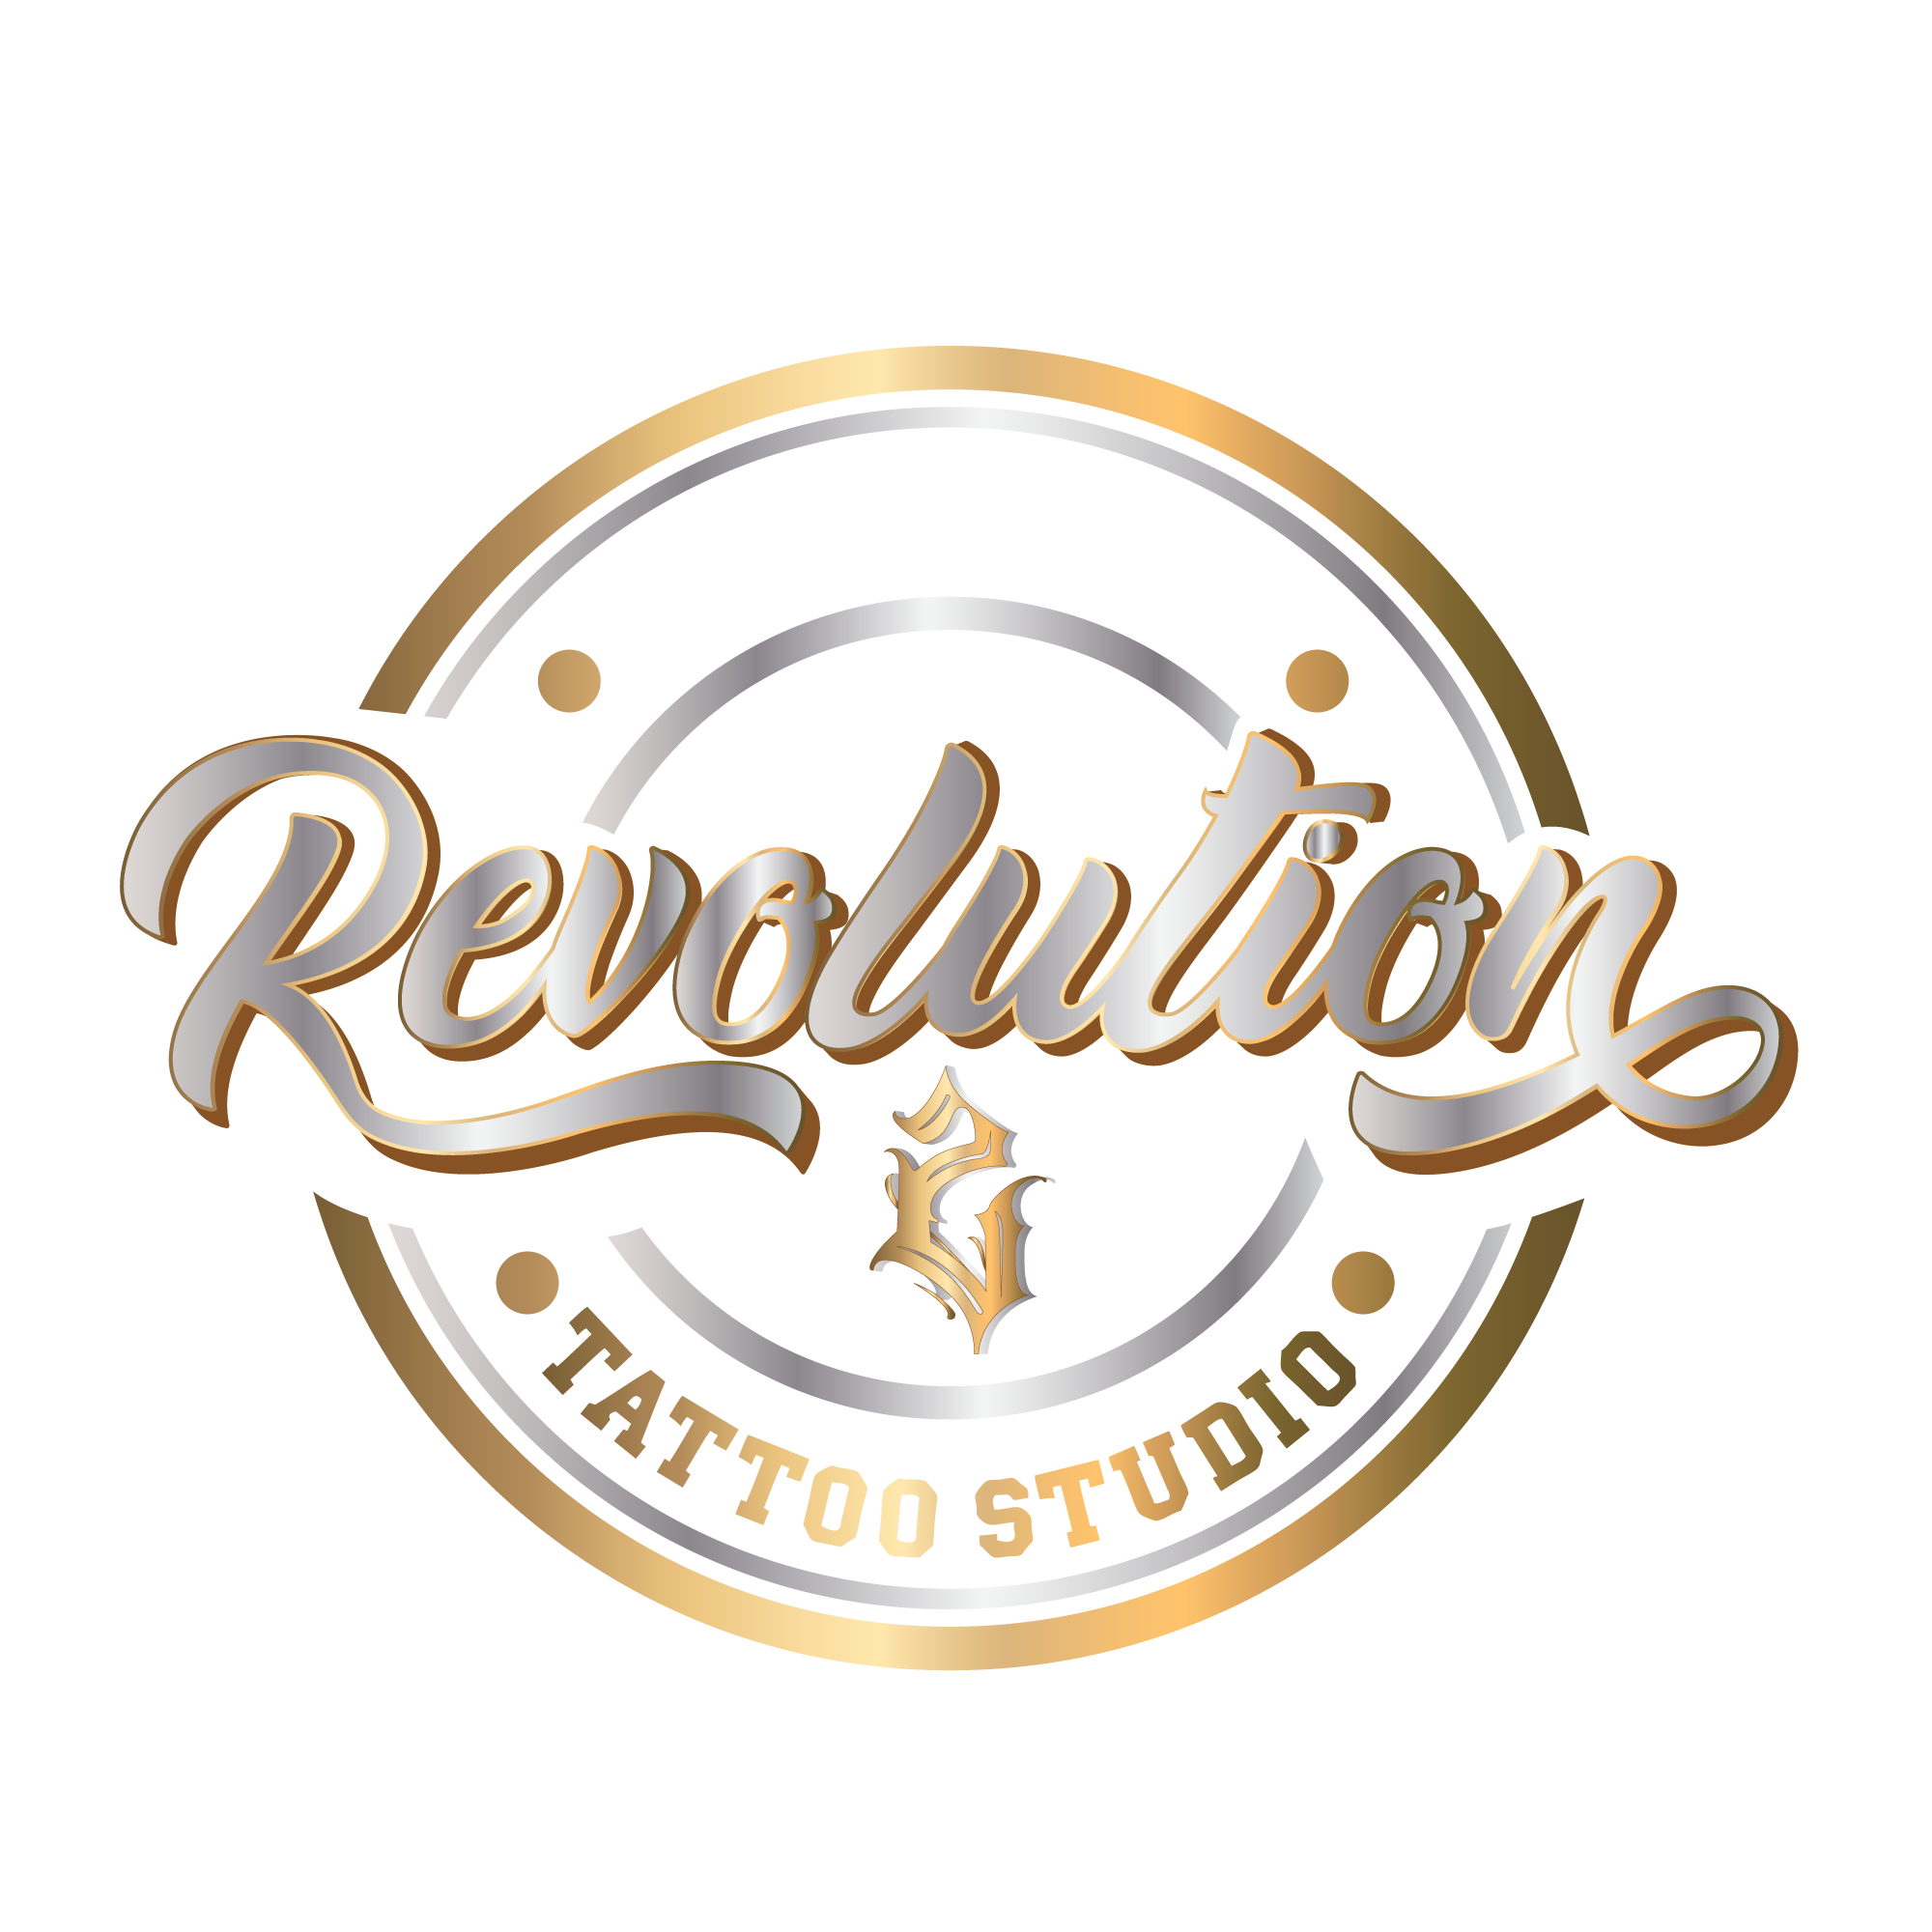 Tatuaje Revolution | Tattoo quotes, Tattoos